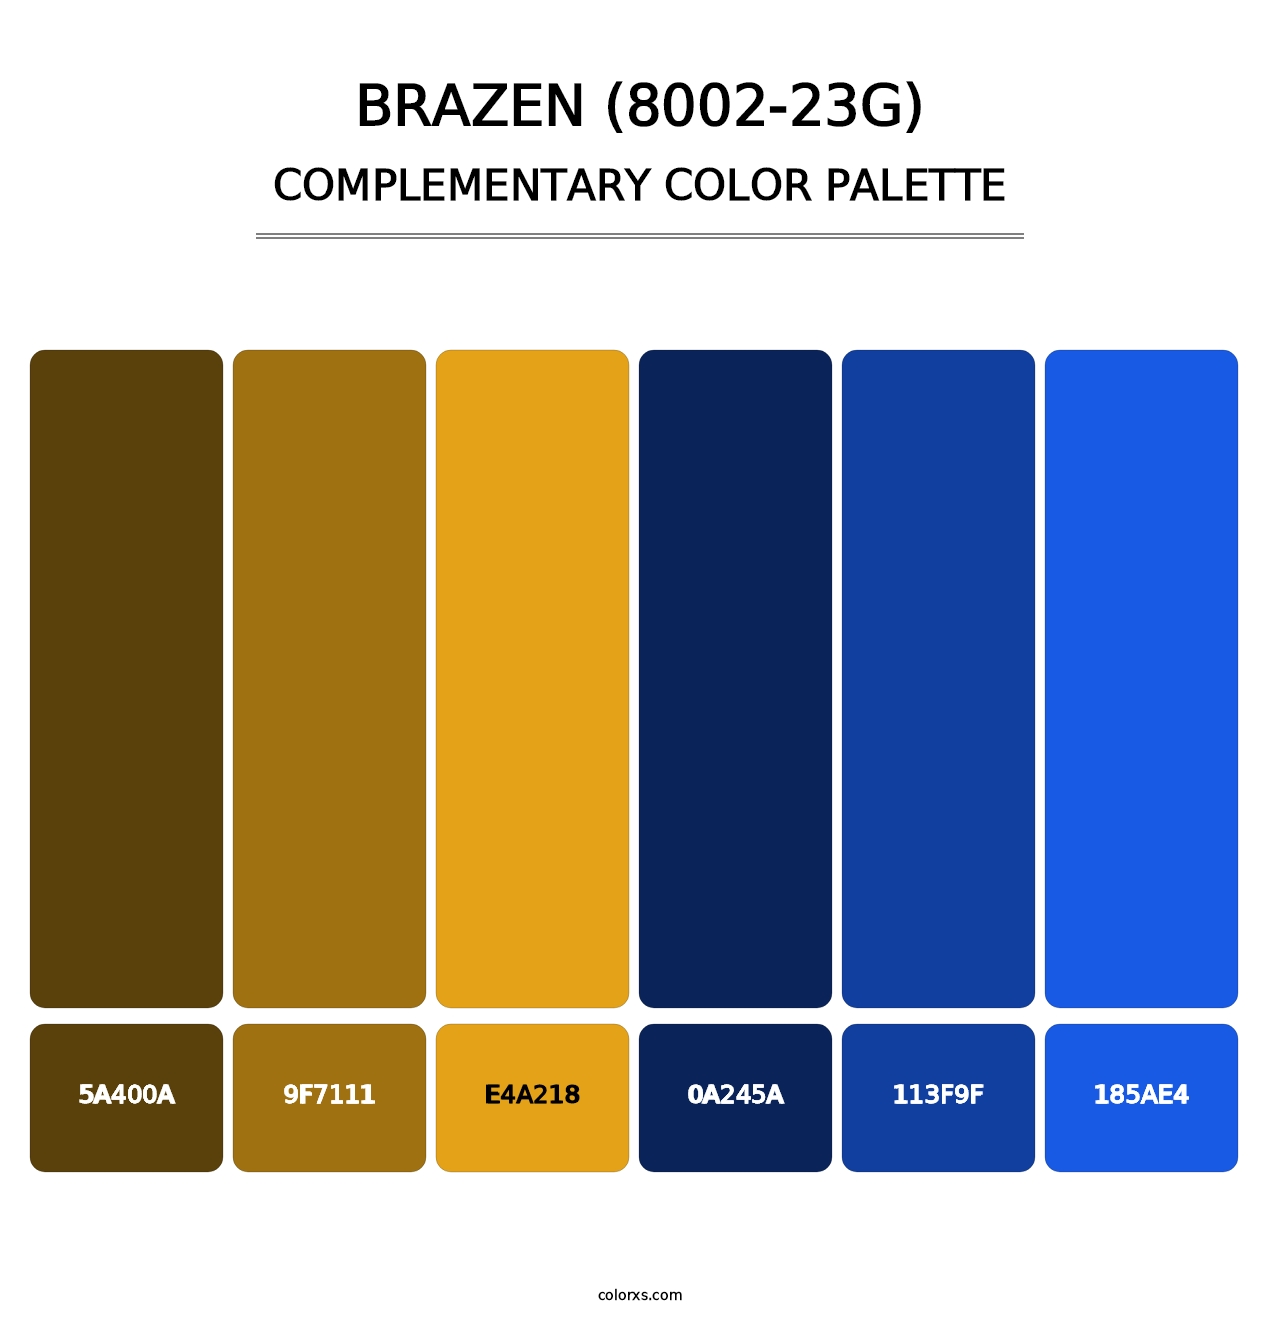 Brazen (8002-23G) - Complementary Color Palette